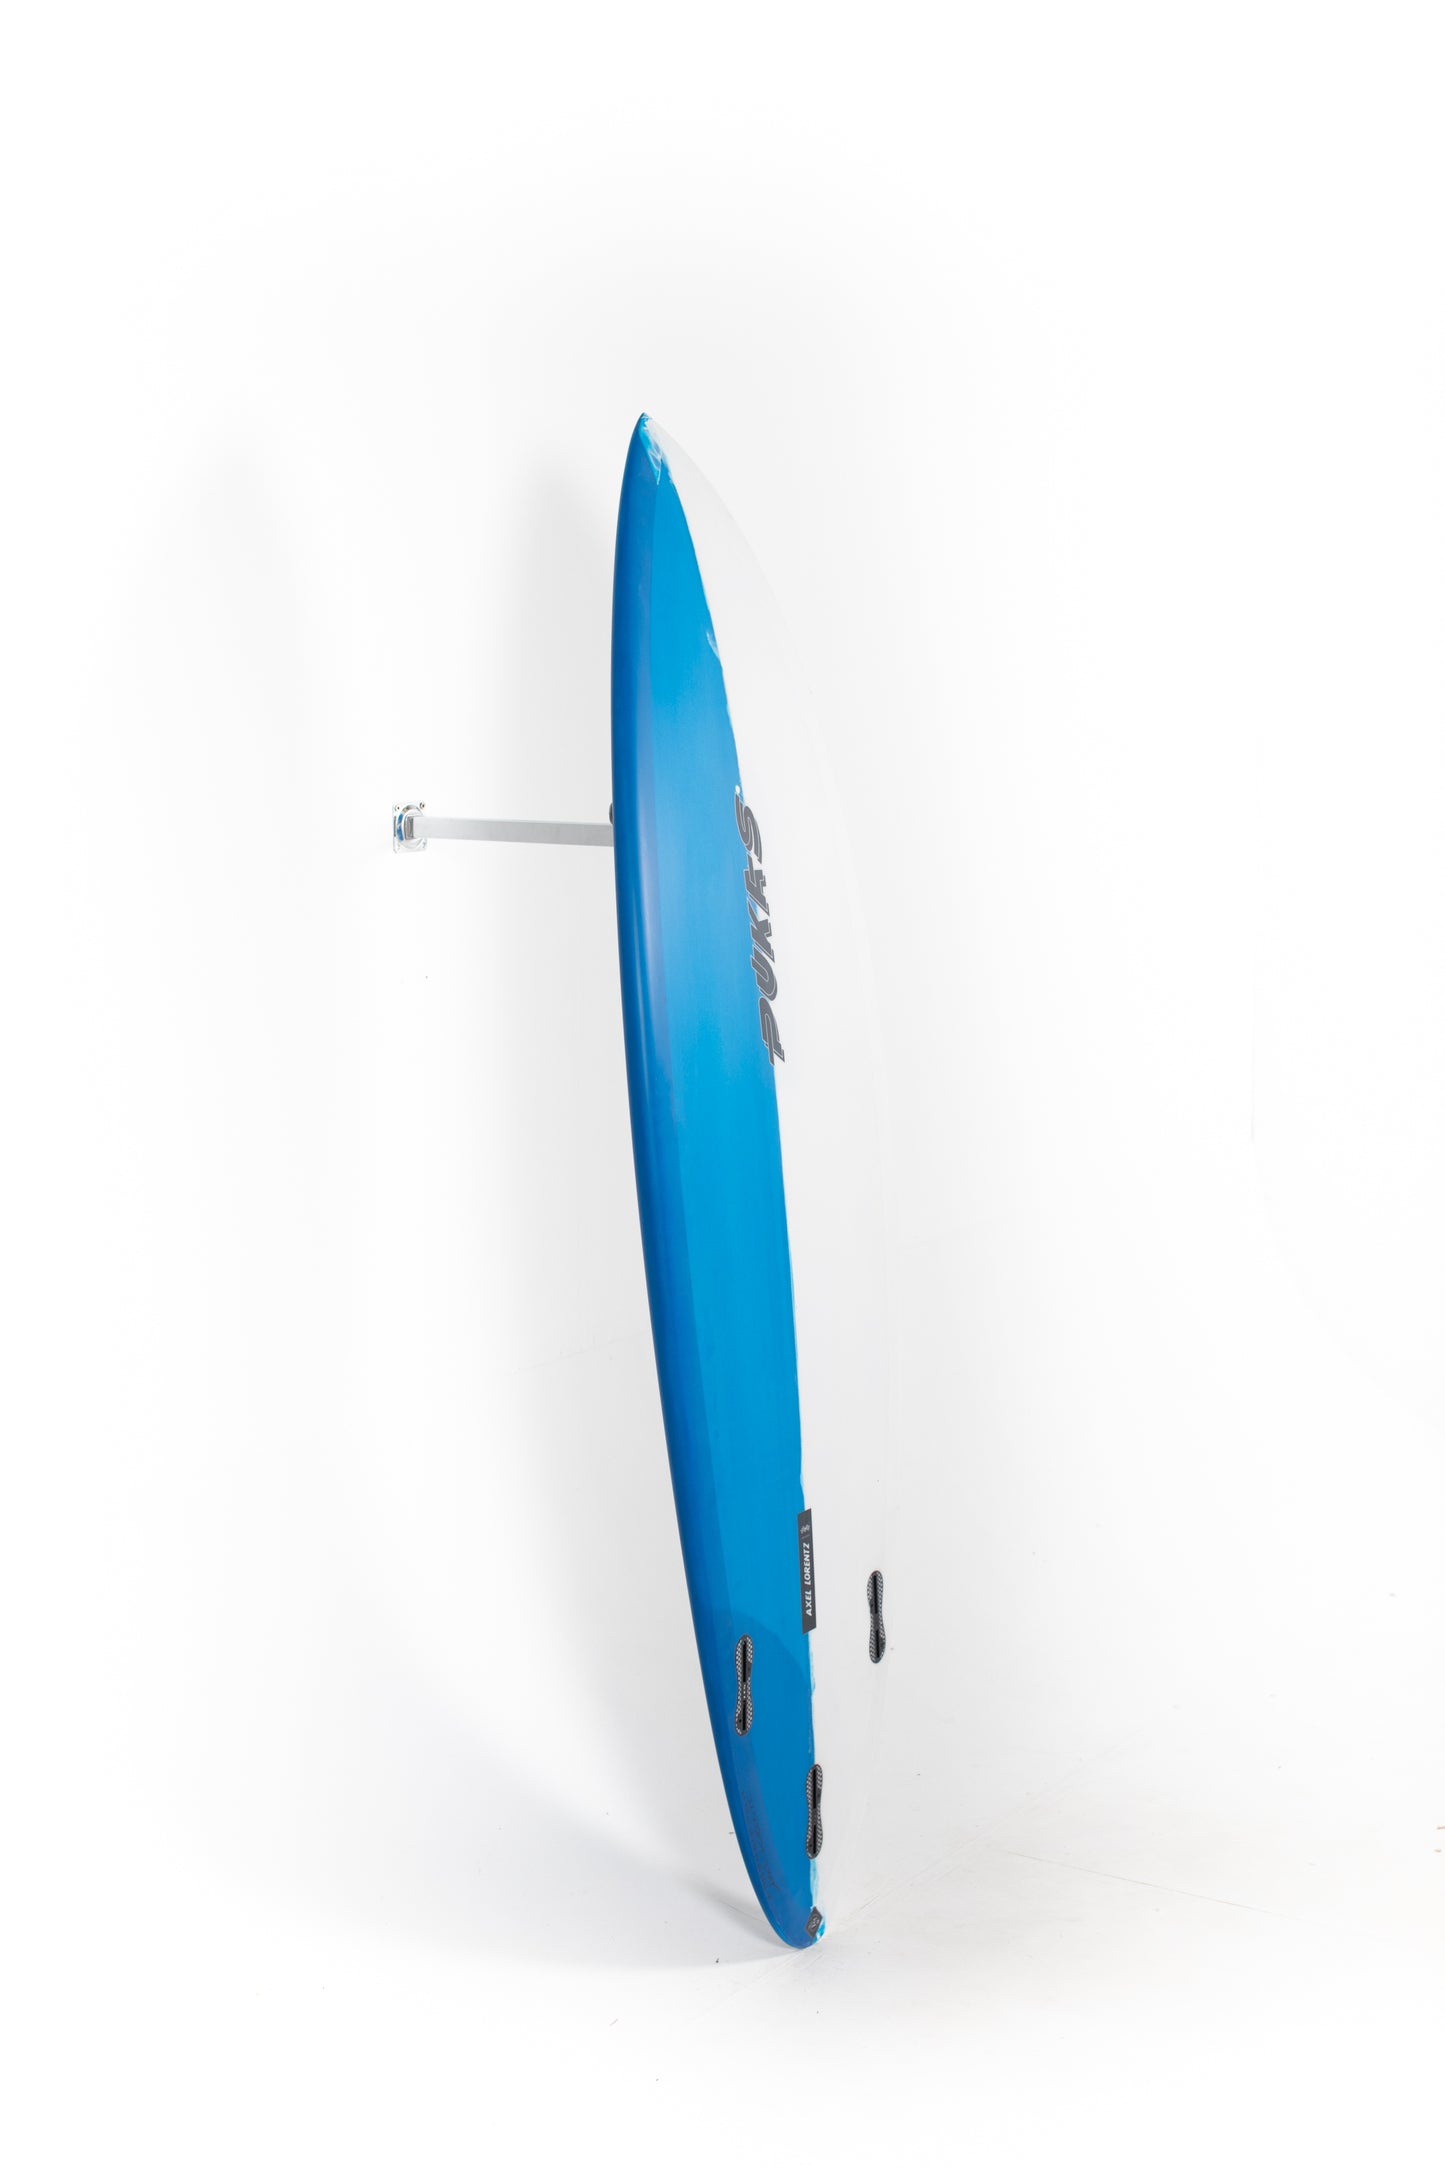 
                  
                    Pukas Surf Shop - Pukas Surfboard - ORIGINAL 69 by Axel Lorentz - 5’8” x 19,75 x 2,37 - 29,2L - AX07923
                  
                